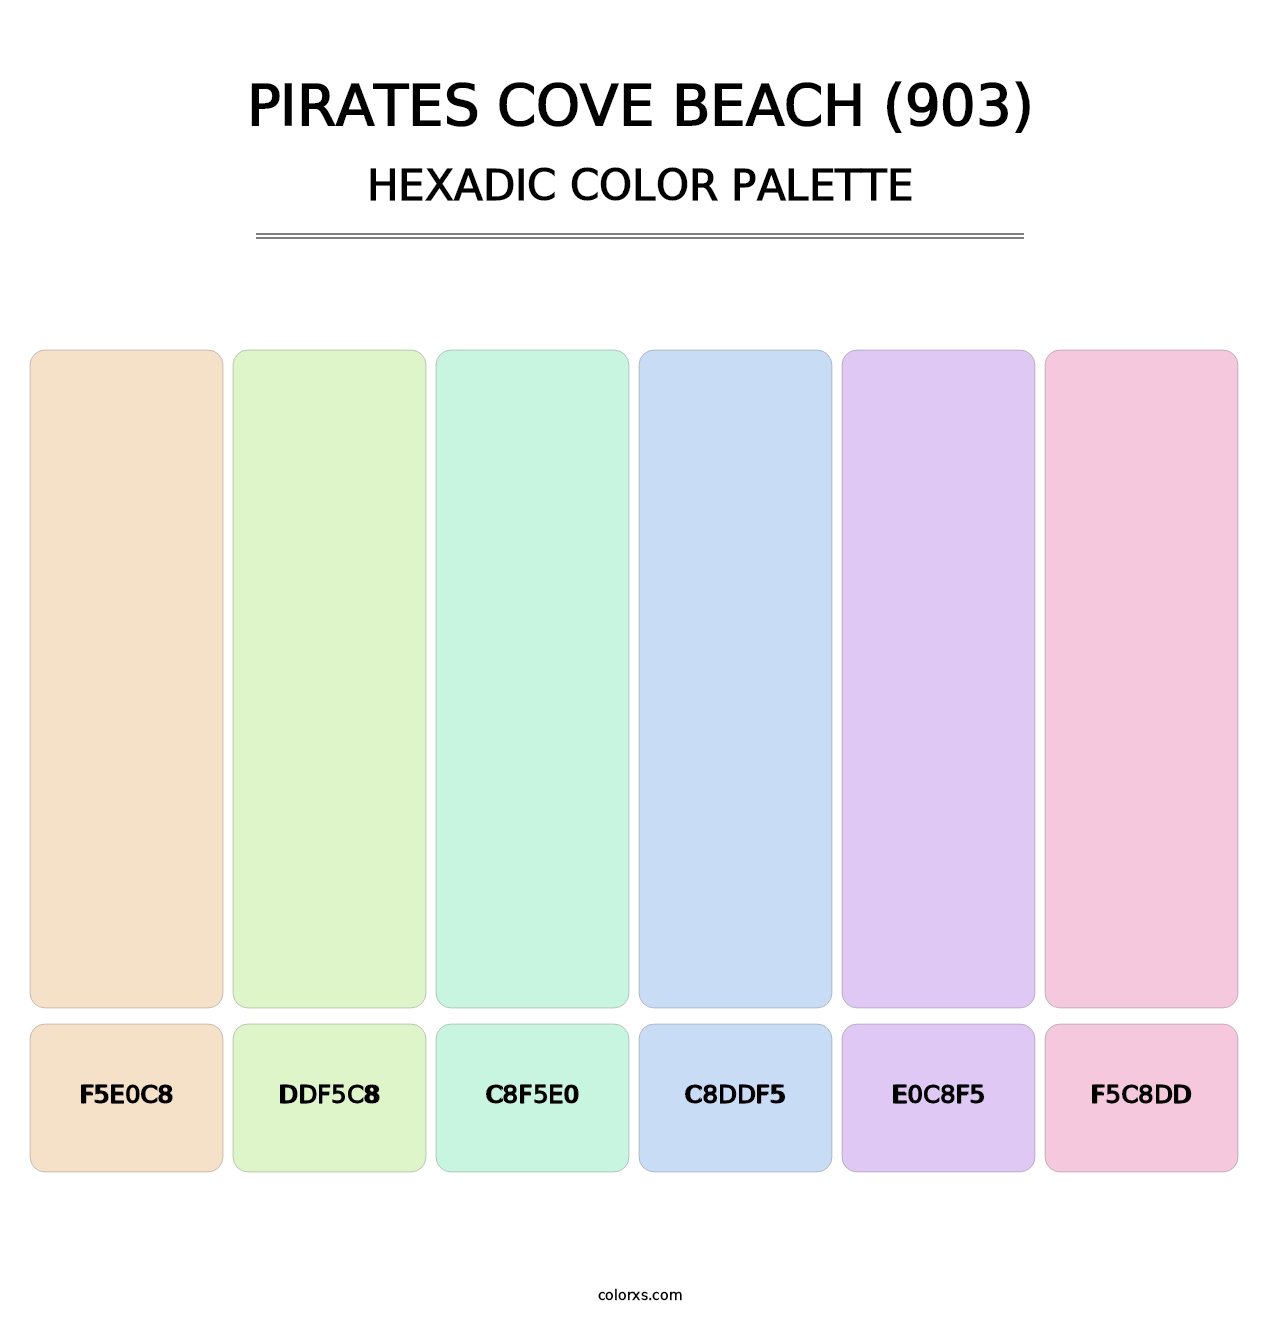 Pirates Cove Beach (903) - Hexadic Color Palette